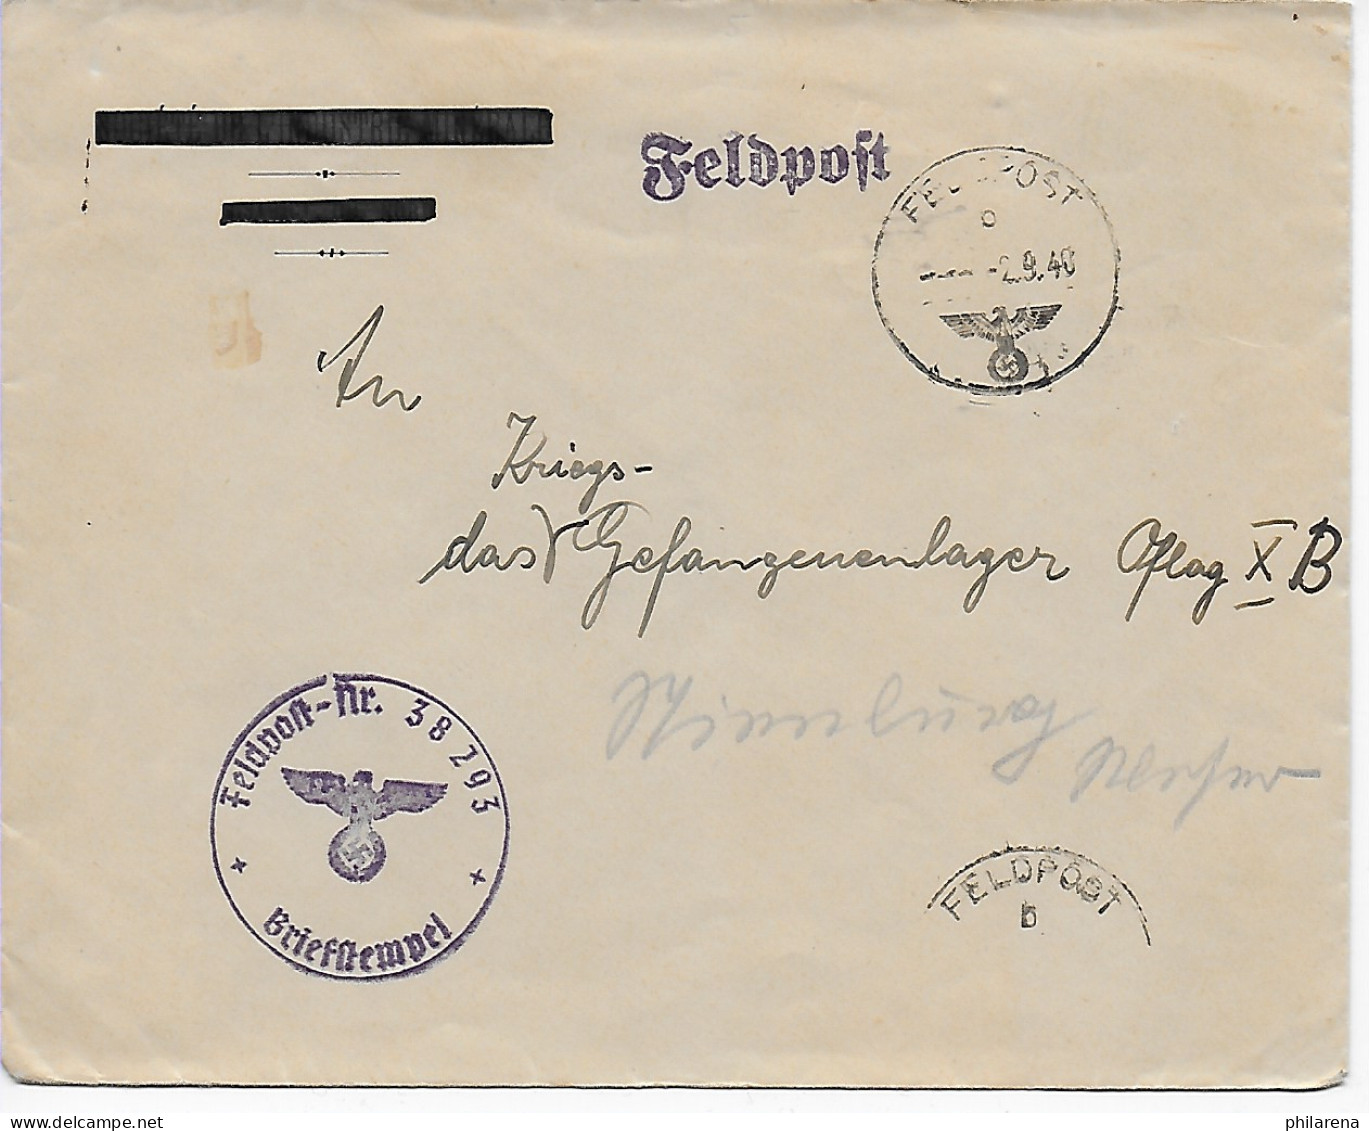 Feldpost Nr. 38293, 1940 An Kriegsgefangenlager Oflag XB, Nienburg - Feldpost World War II